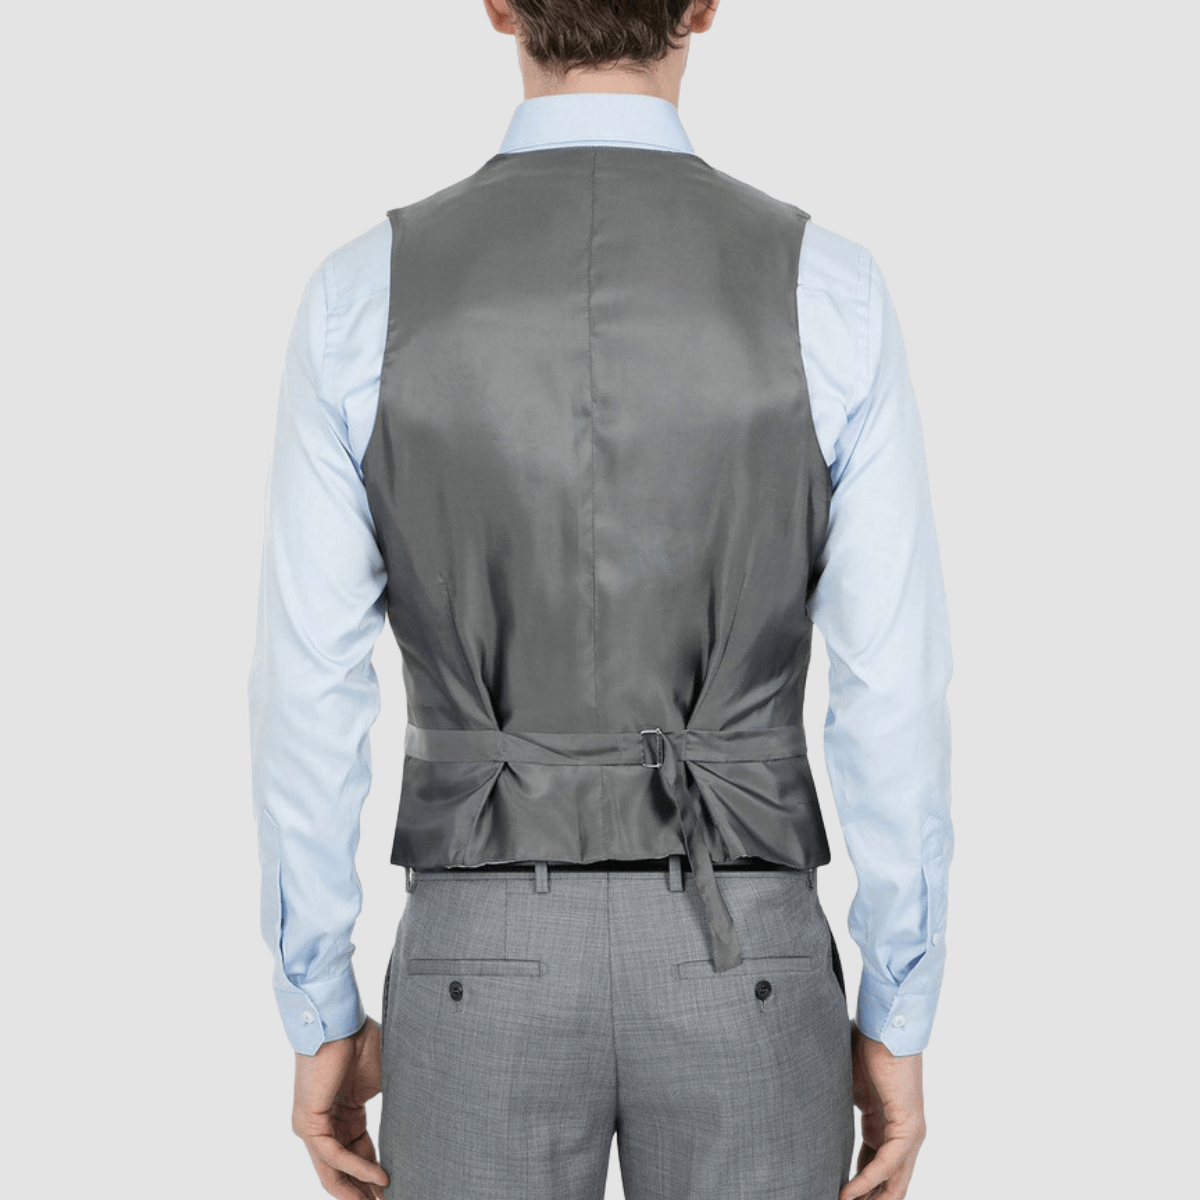 Mens Waistcoats | Mens Suit Vests | Gibson slim fit mighty vest grey ...